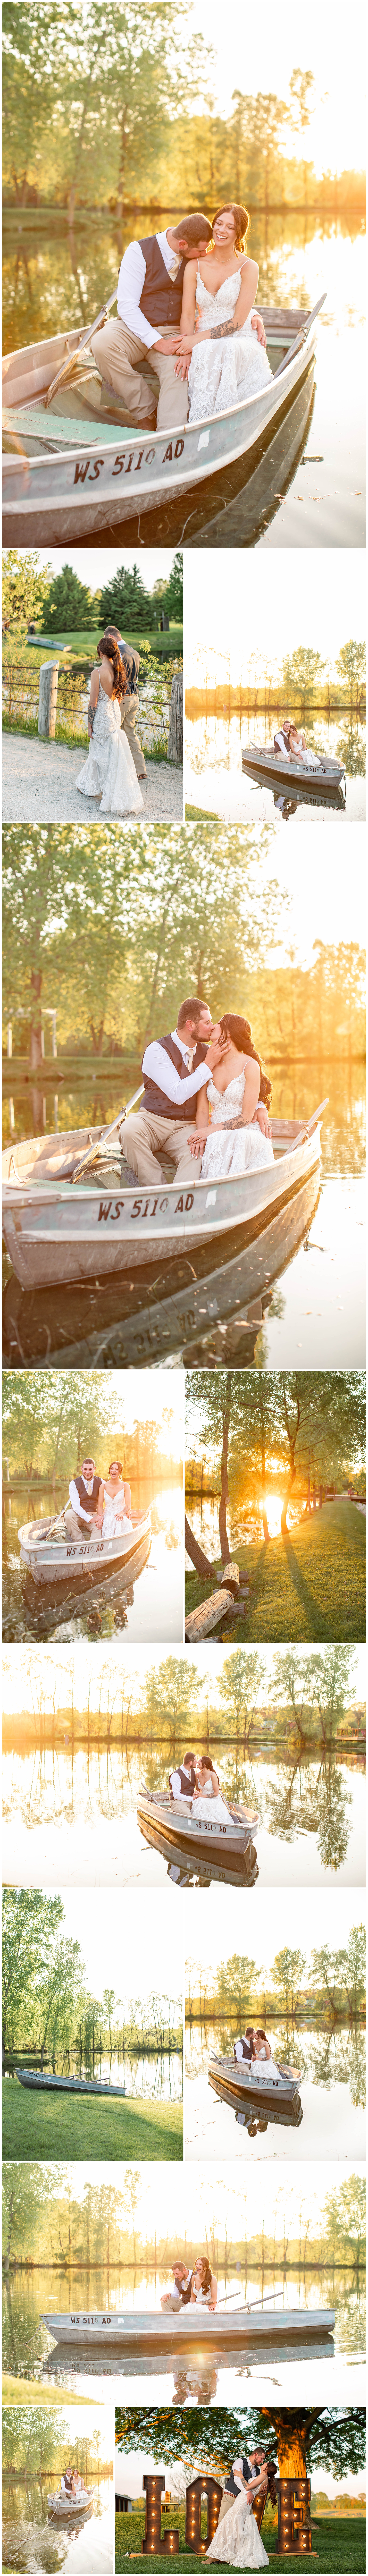 golden hour wedding portraits on pond in paddleboat